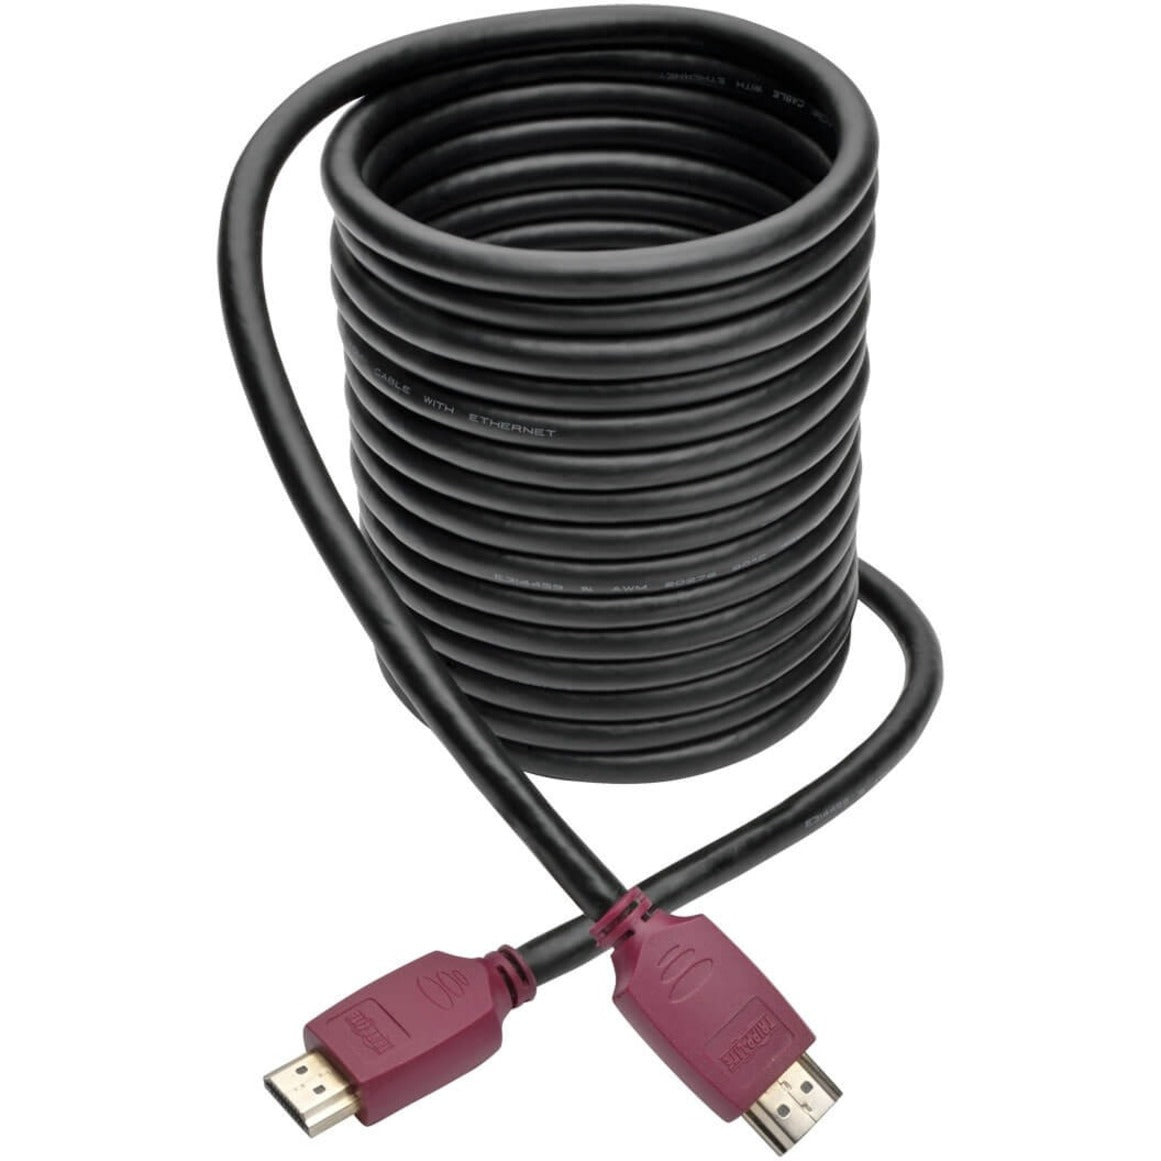 Tripp Lite P569-015-CERT Premium High-Speed HDMI Cable with Ethernet (M/M), 15 ft, UHD 4K, Lifetime Warranty